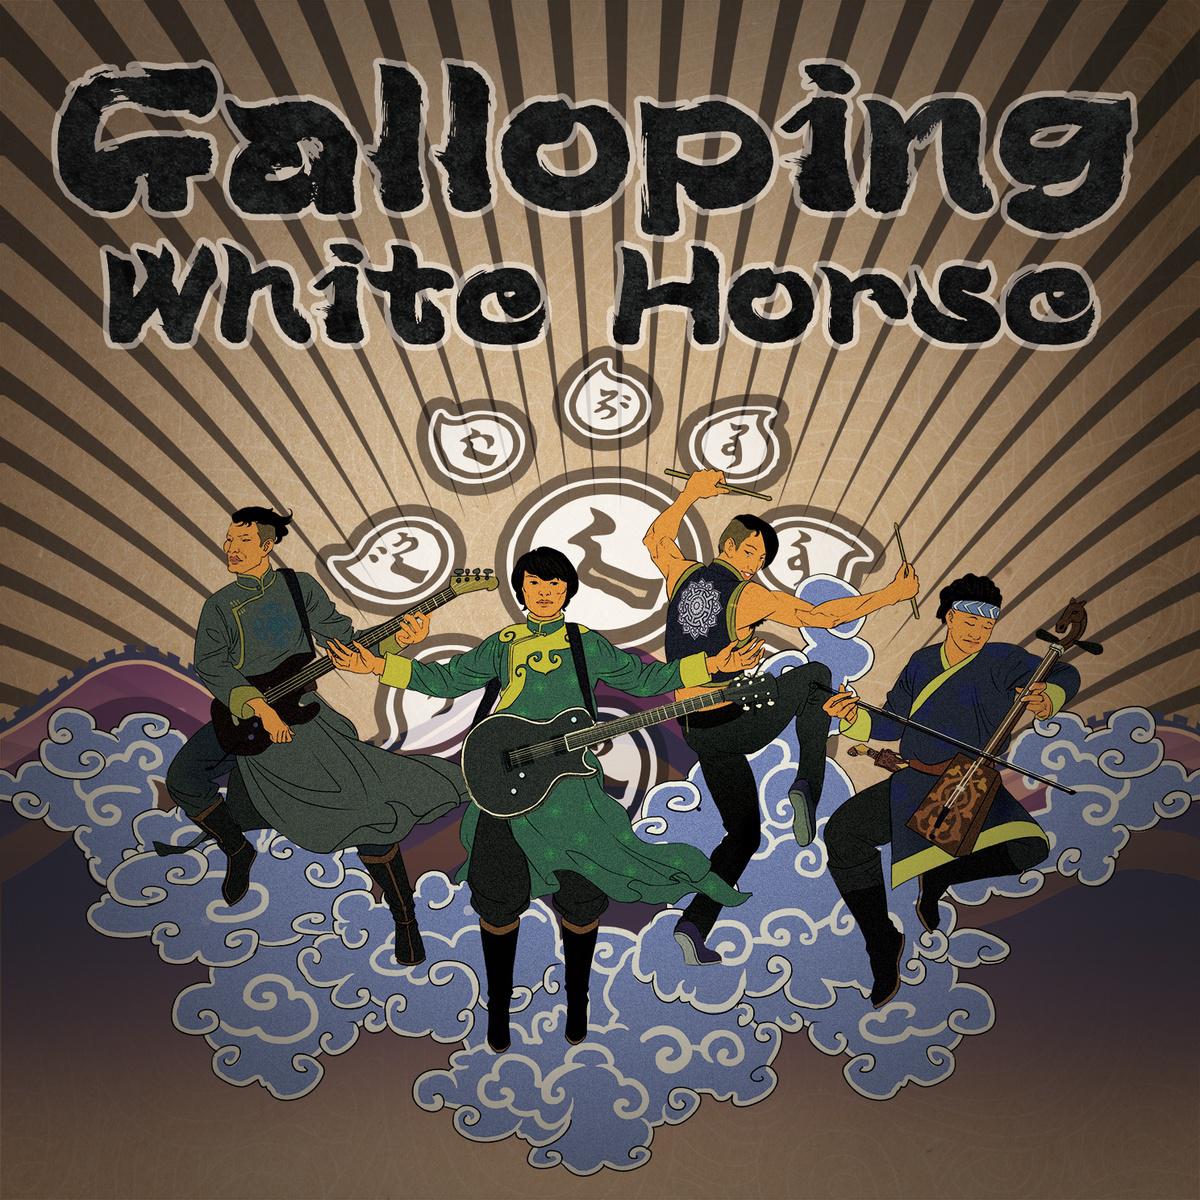 Galloping White Horse专辑